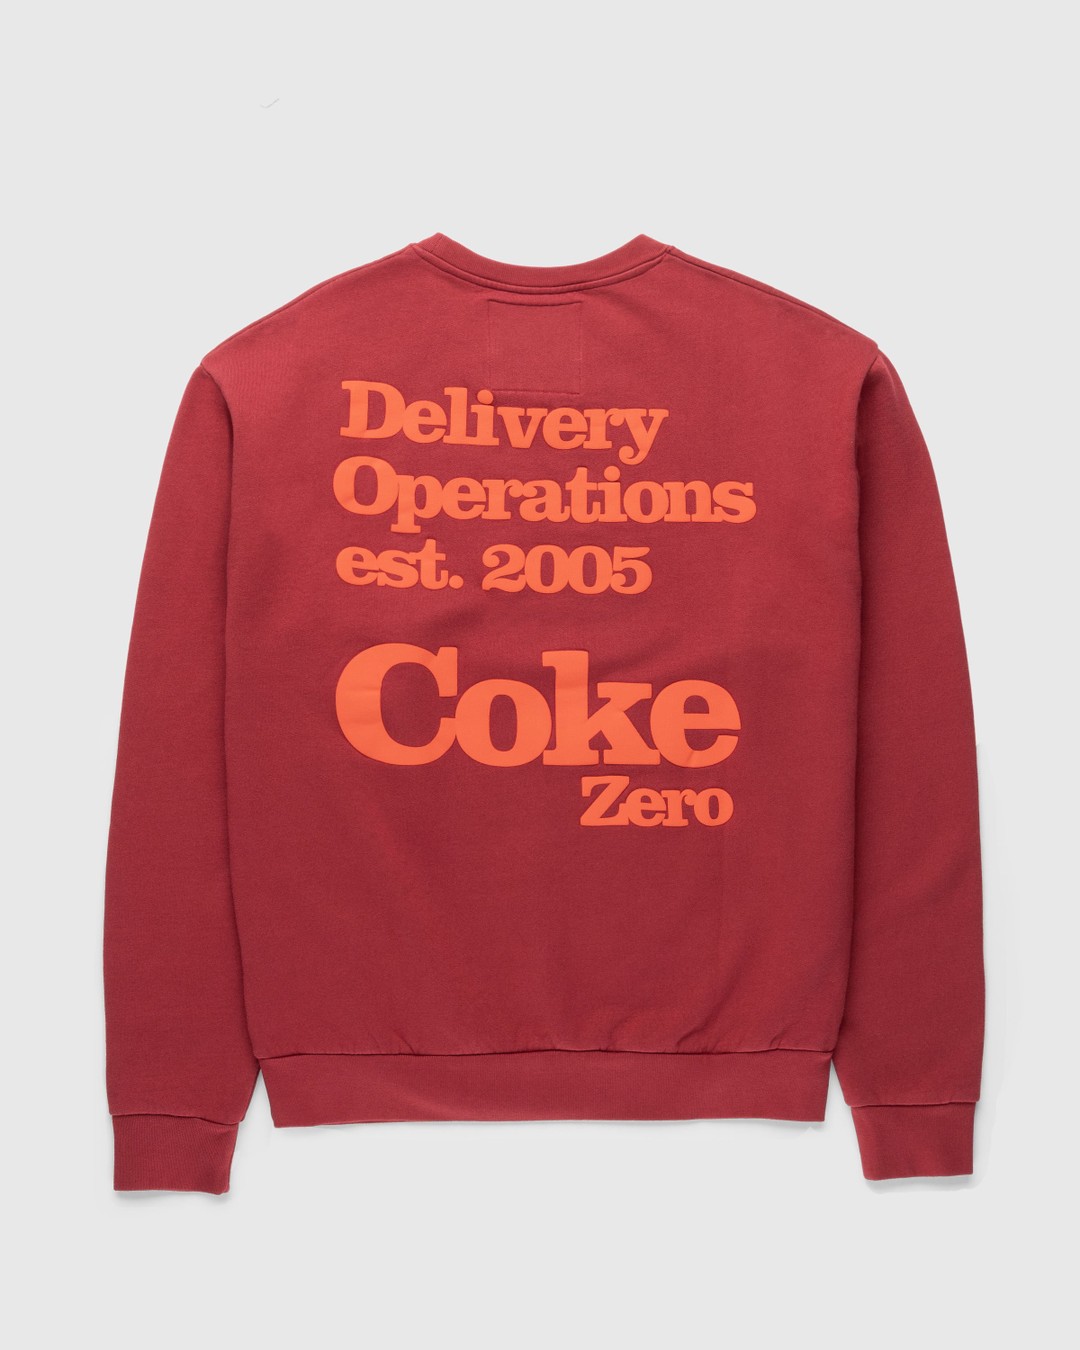 Highsnobiety x Coca-Cola Zero Sugar – Crewneck Burgundy - Knitwear - Red - Image 1